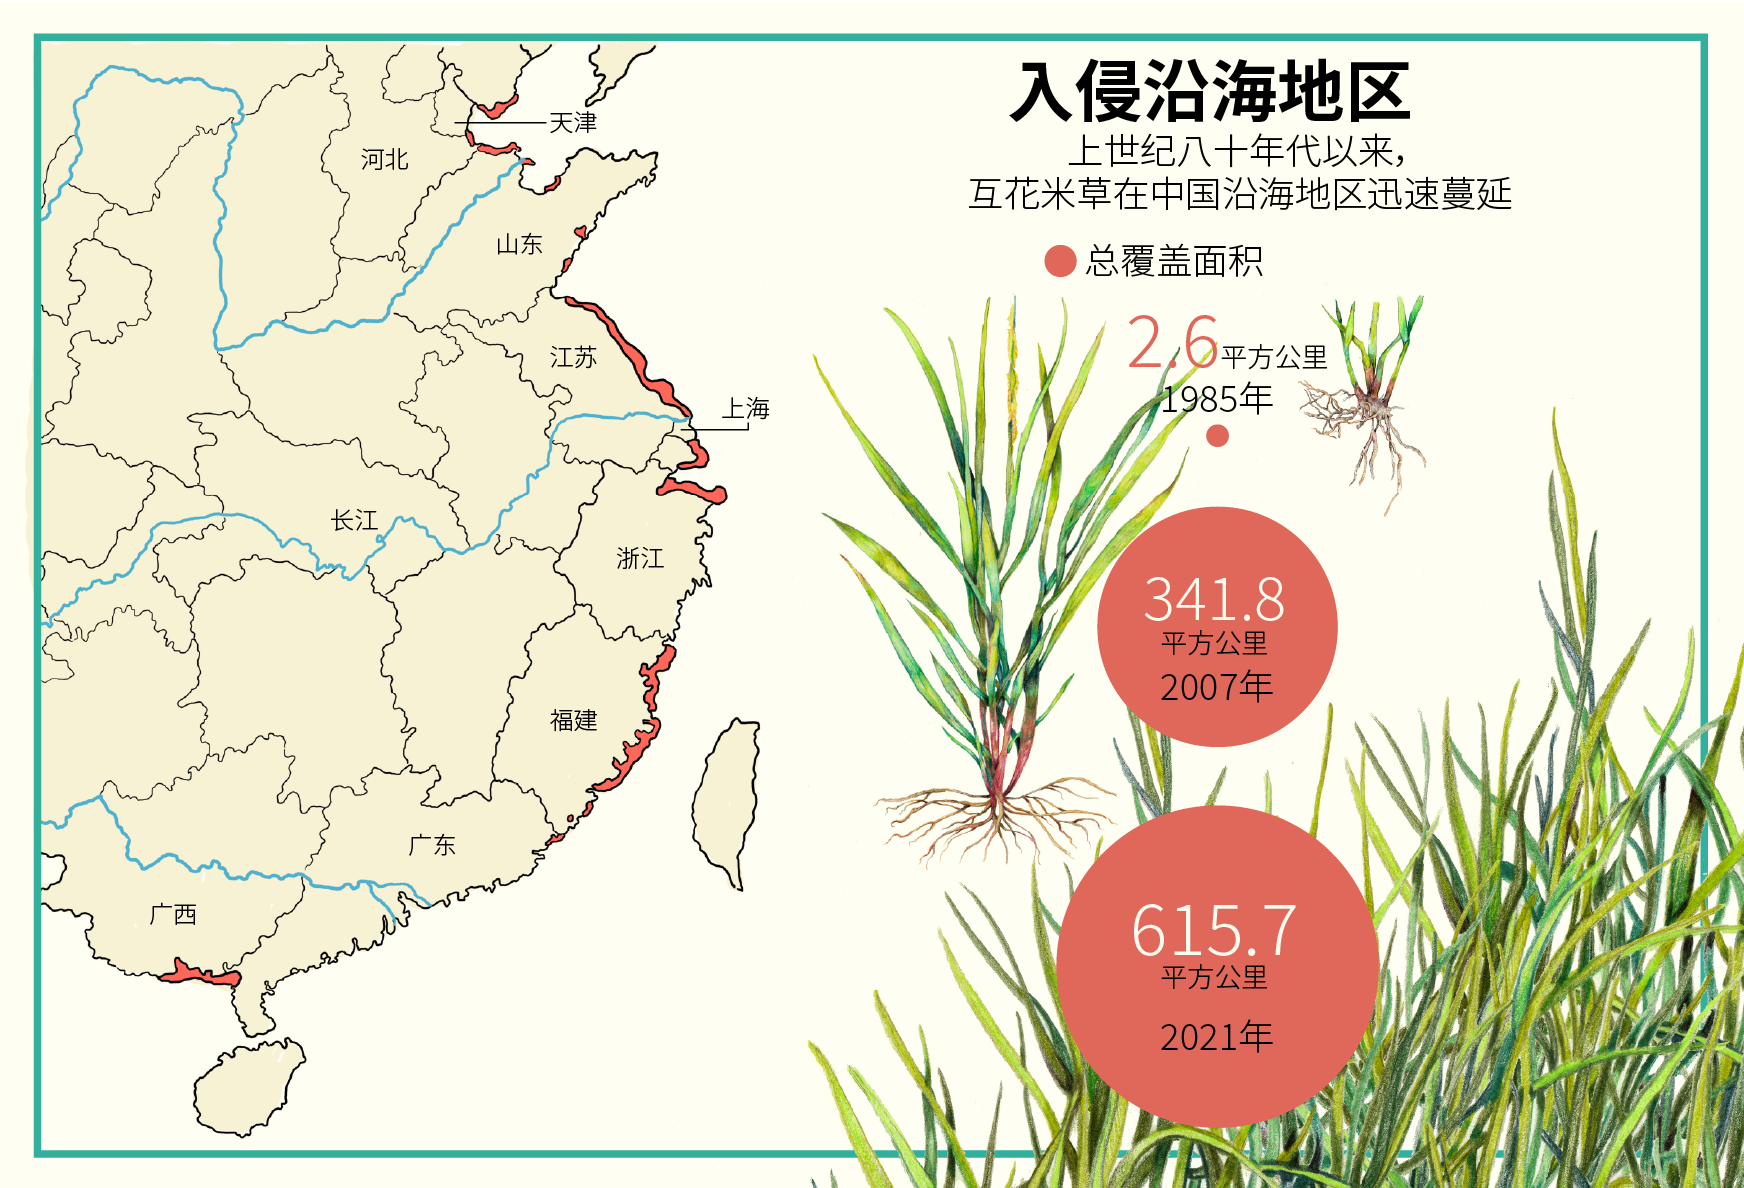 Cordgrass invading China's coast